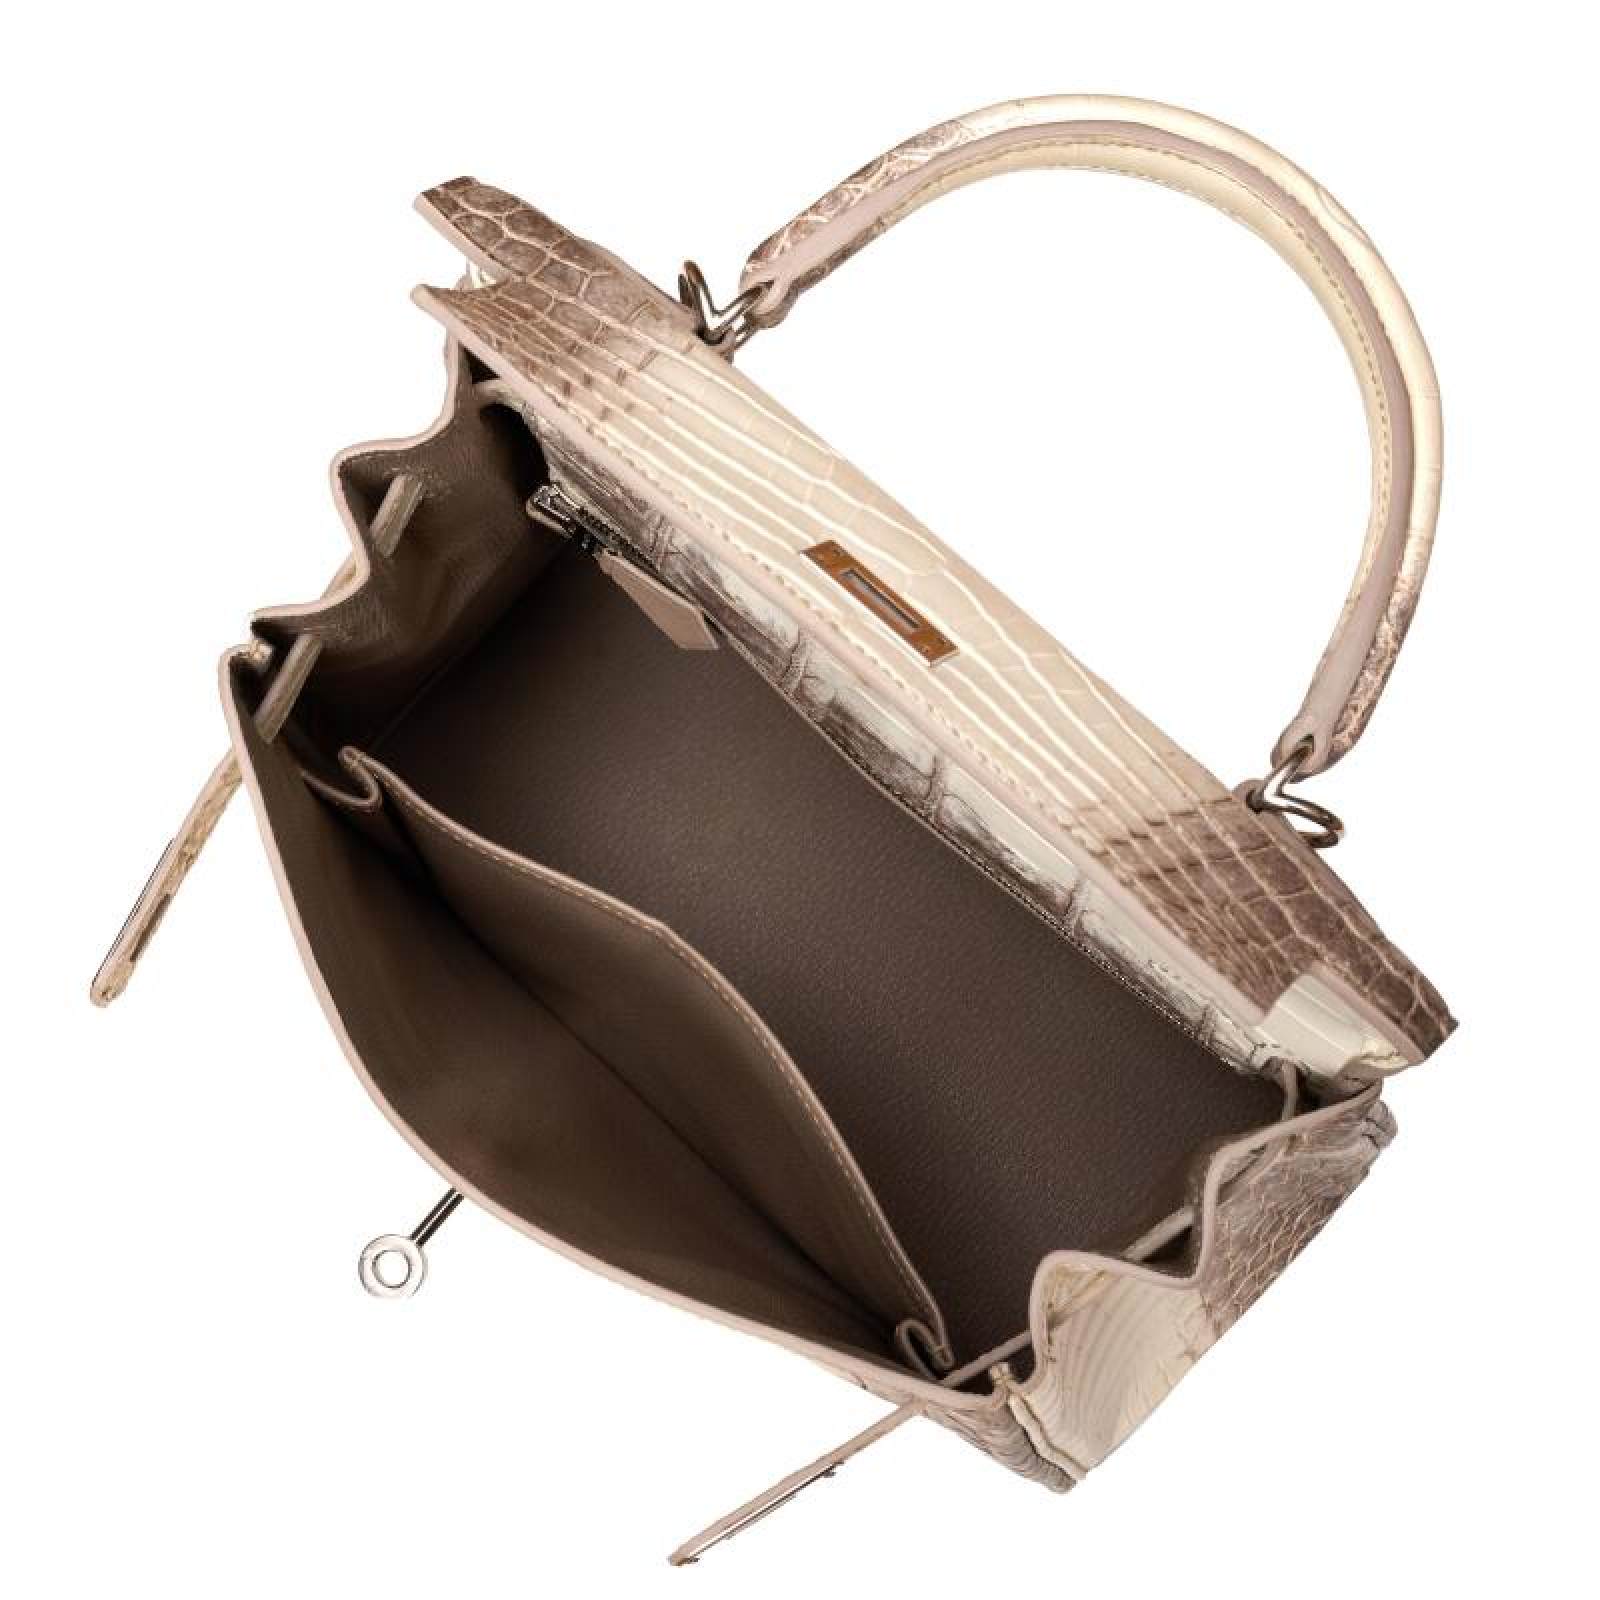 Sold at Auction: Designer Brown Crocodile Leather Backpack